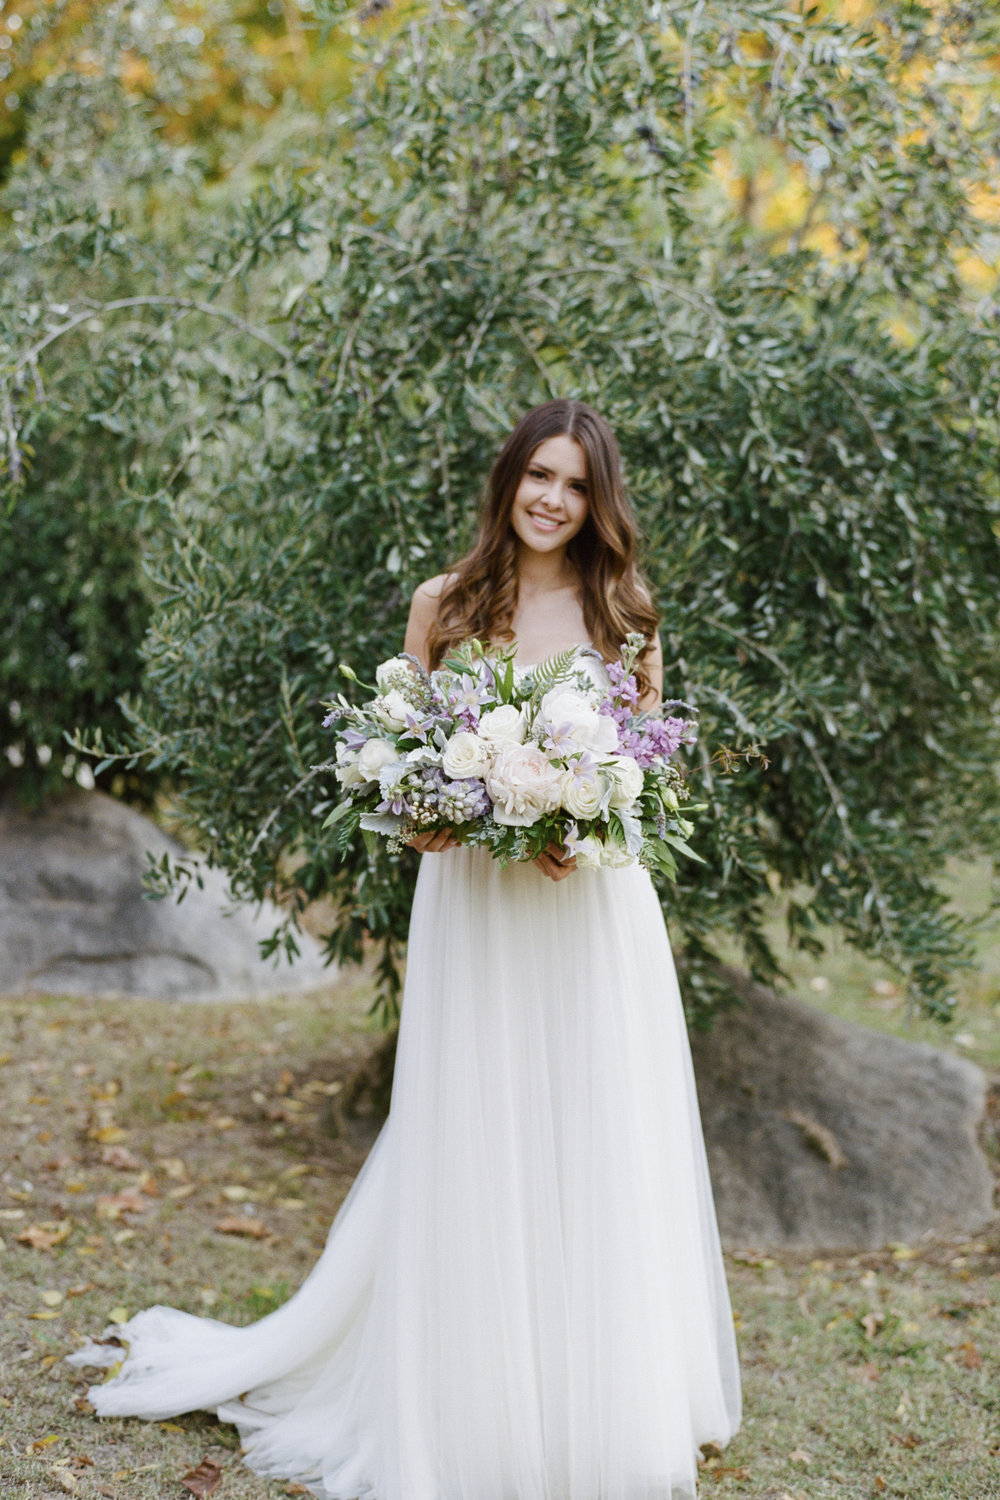 Violette-fleurs-roseville-sacramento-california-Flower-farm-inn-wedding-florist-spring-bride-blush-purple-arrangement-centerpiece-wedding.jpg